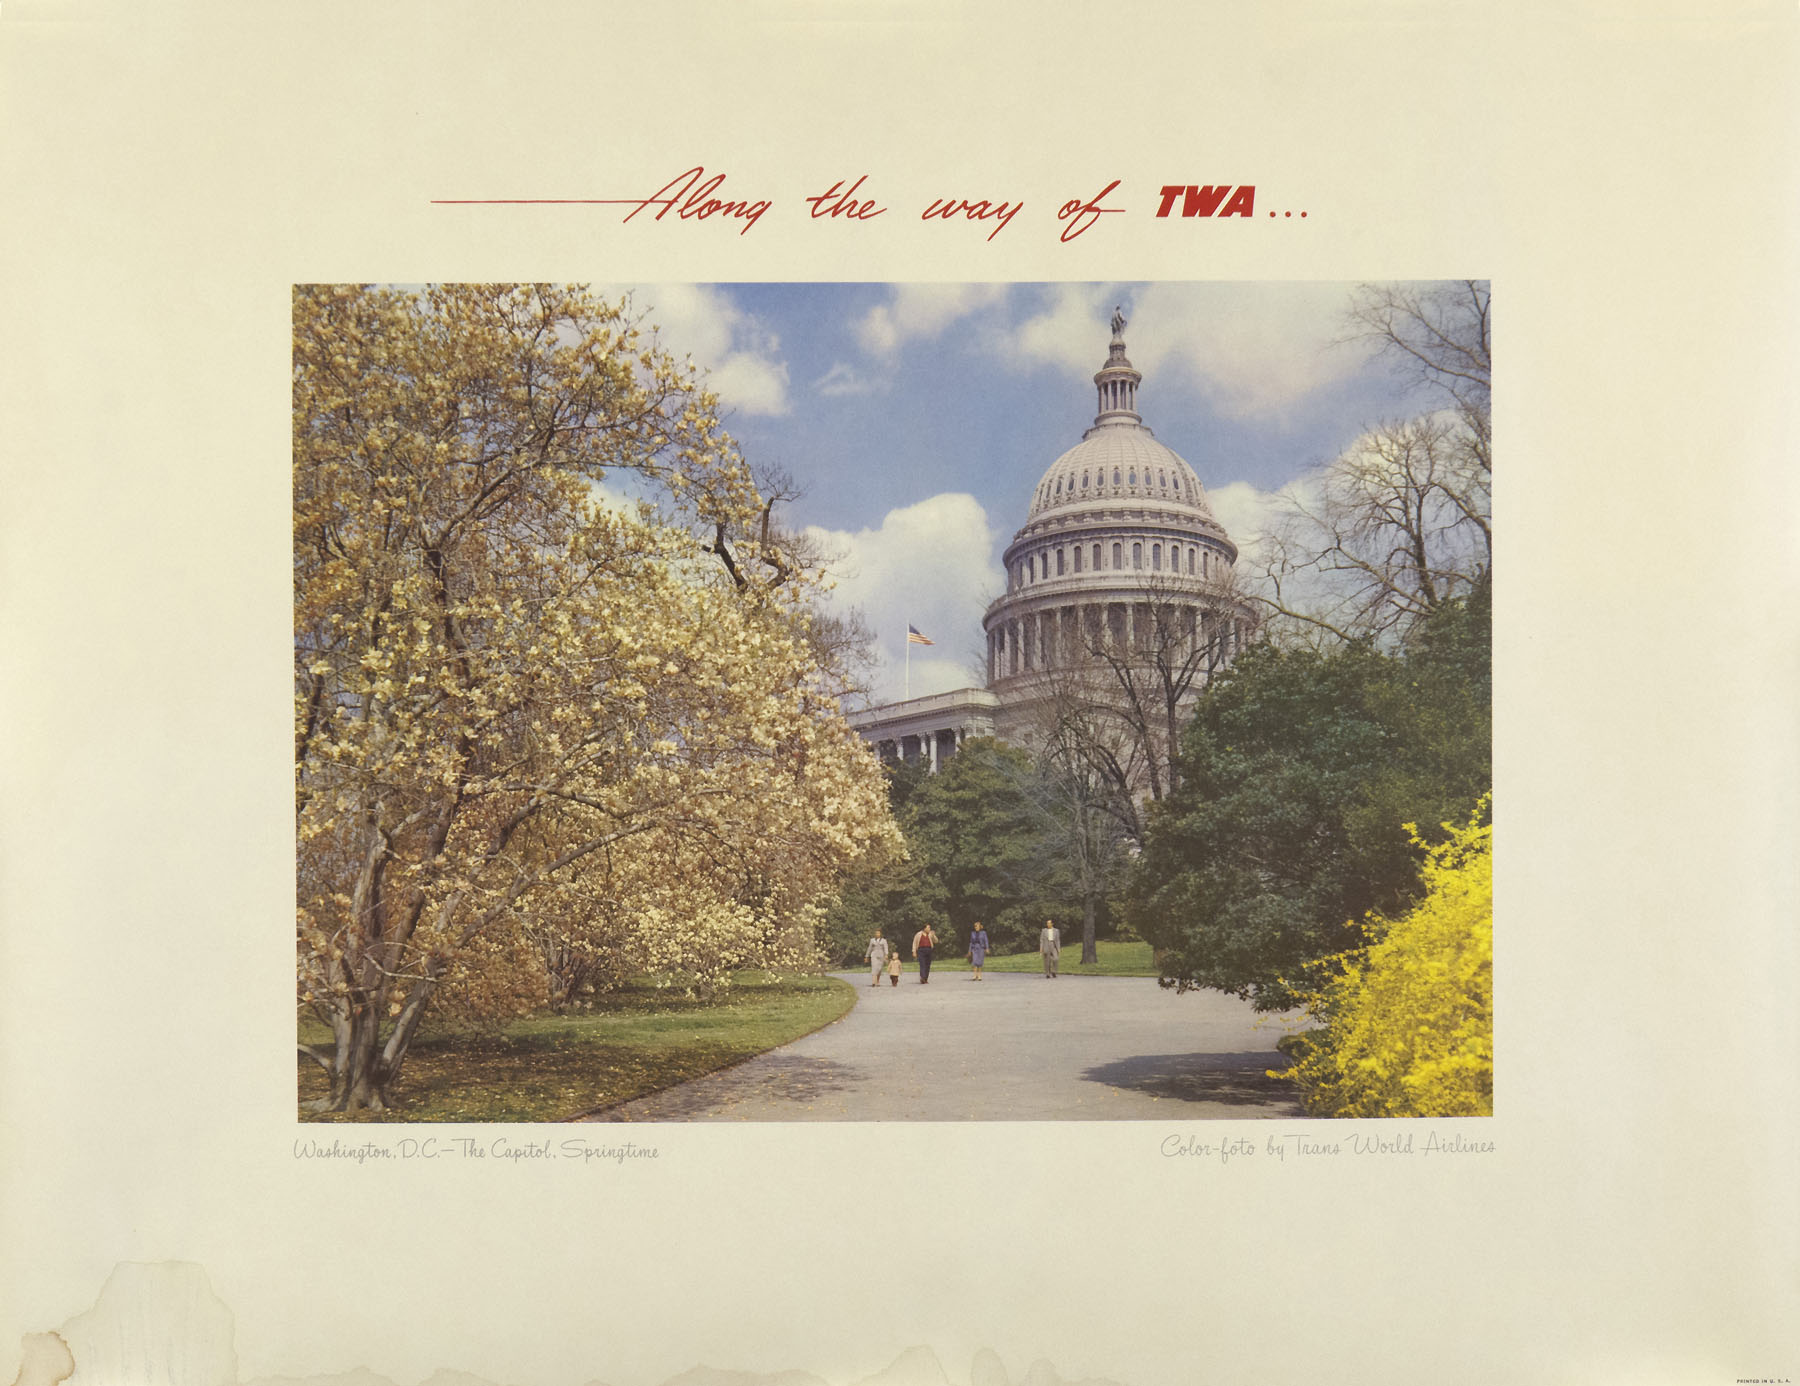 Along the way of TWA... Washington D.C. - The Capitol Springtime